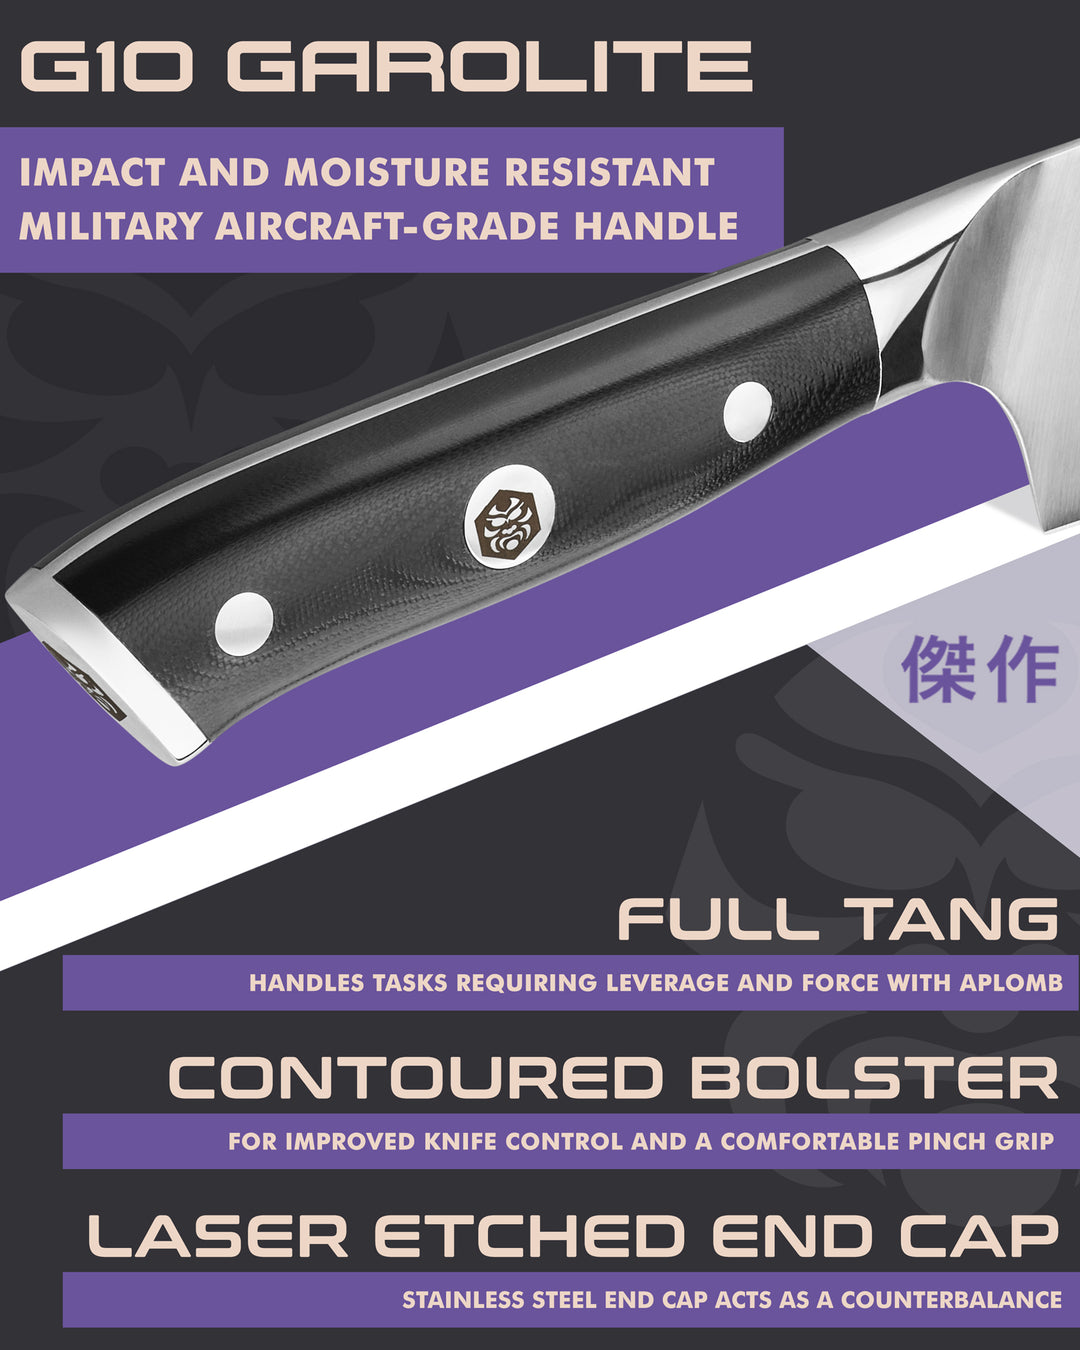 Kessaku Dynasty Nakiri Knife handle features: G10 handle, full tang, contoured bolster, laser etched end cap